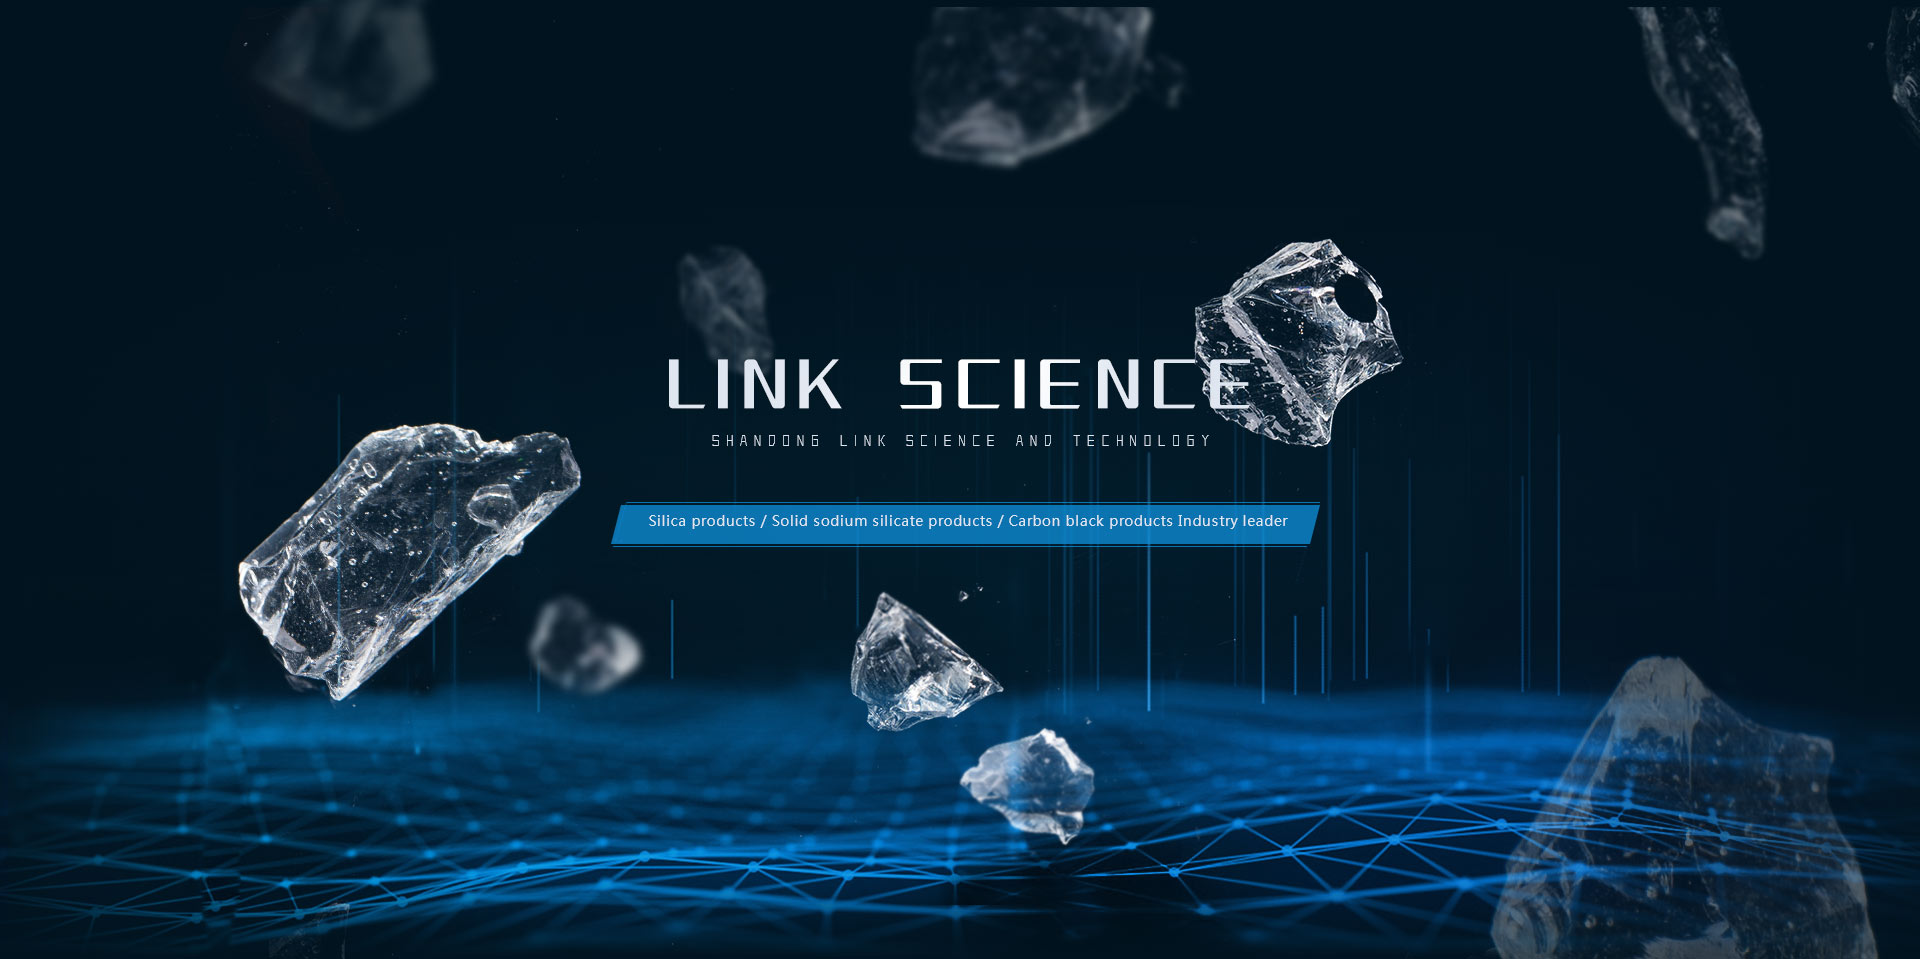 Link Technology